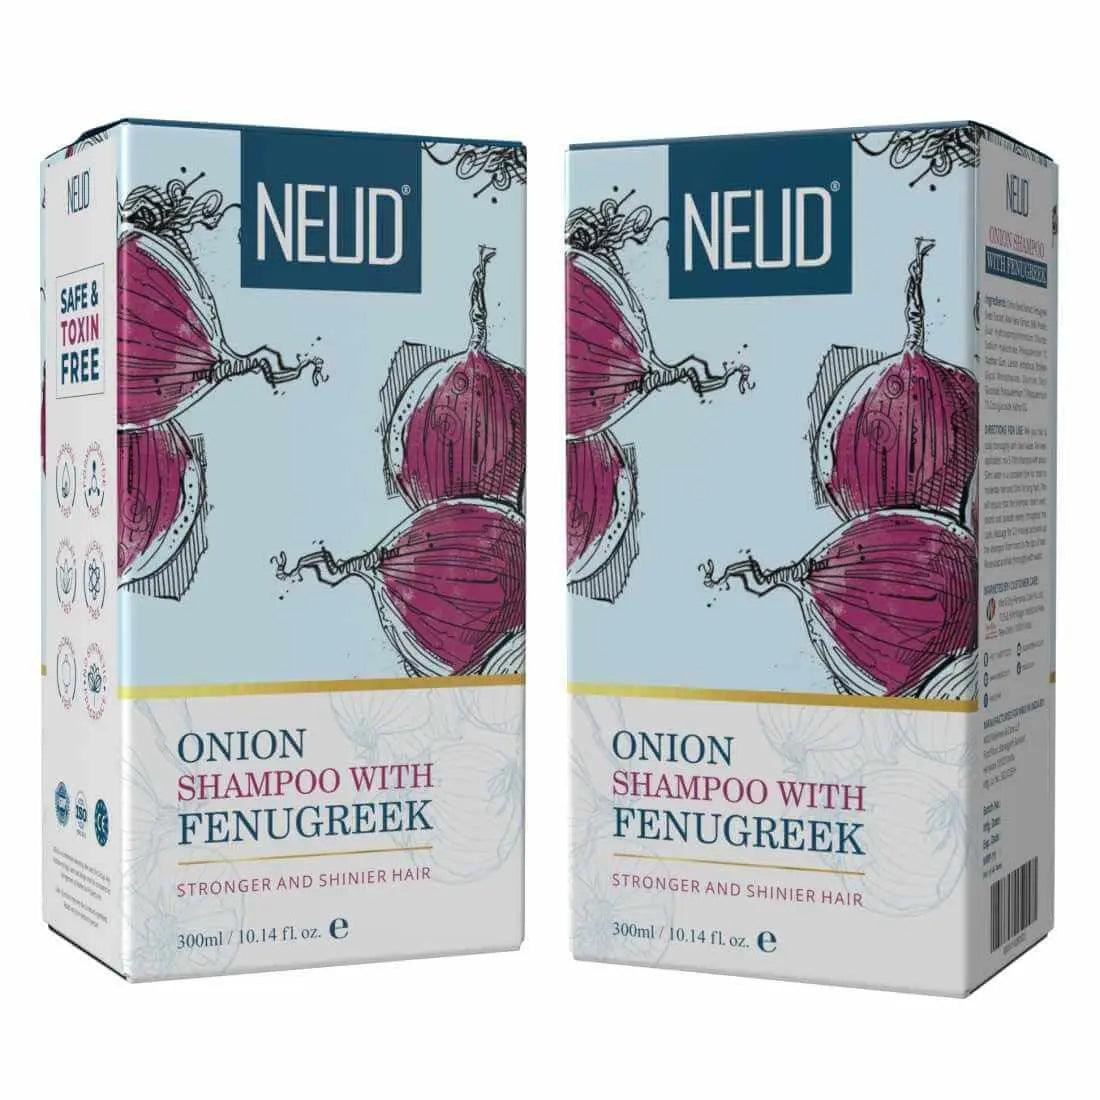 NEUD Premium Onion Hair Shampoo with Fenugreek for Men & Women - 300 ml 9559682305800